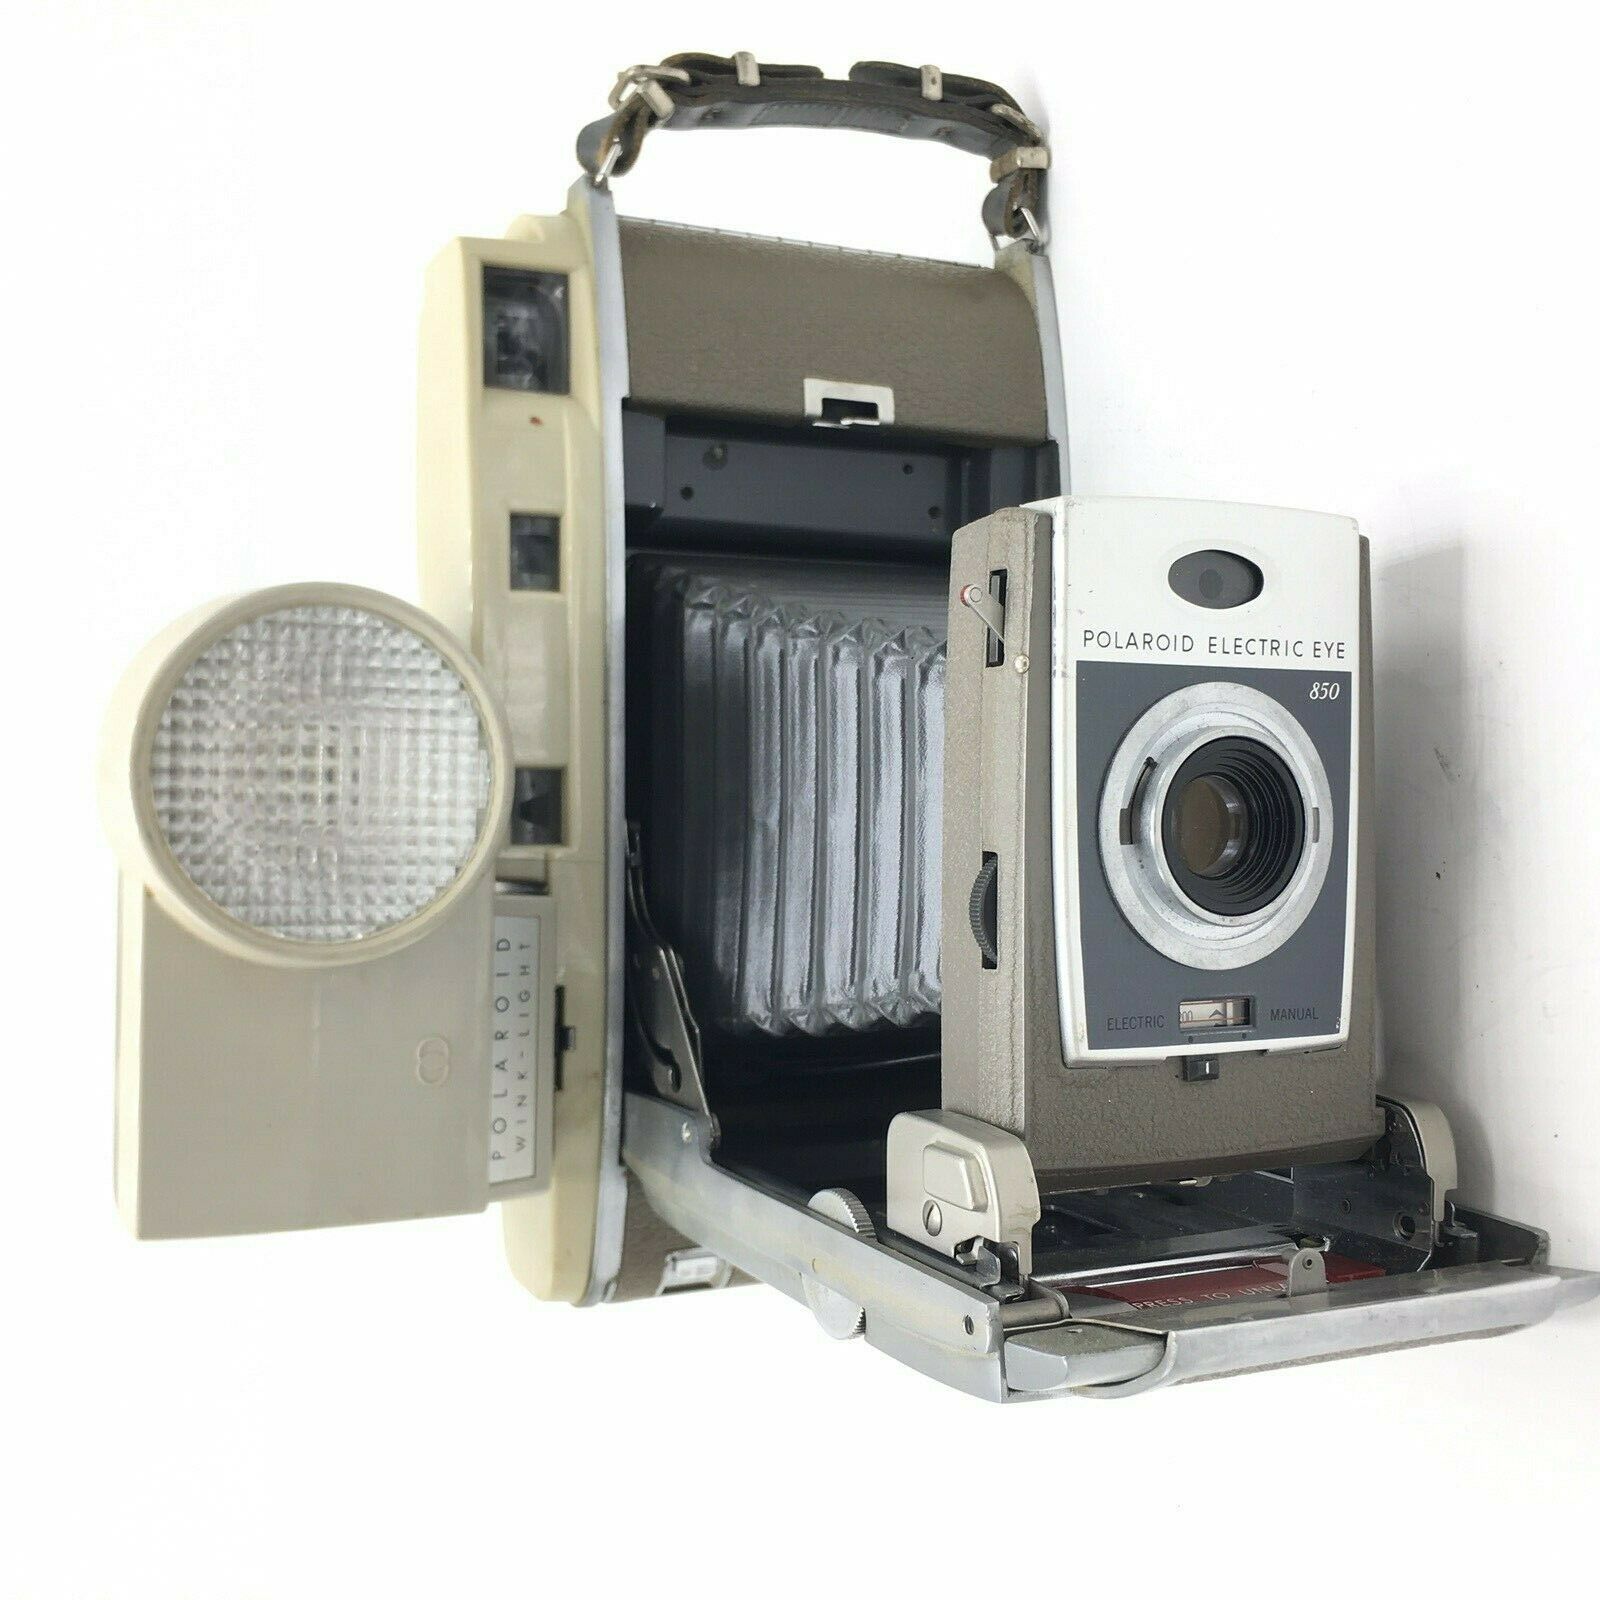 Polaroid Camera Model 850 Electric Eye Land Camera With Flash